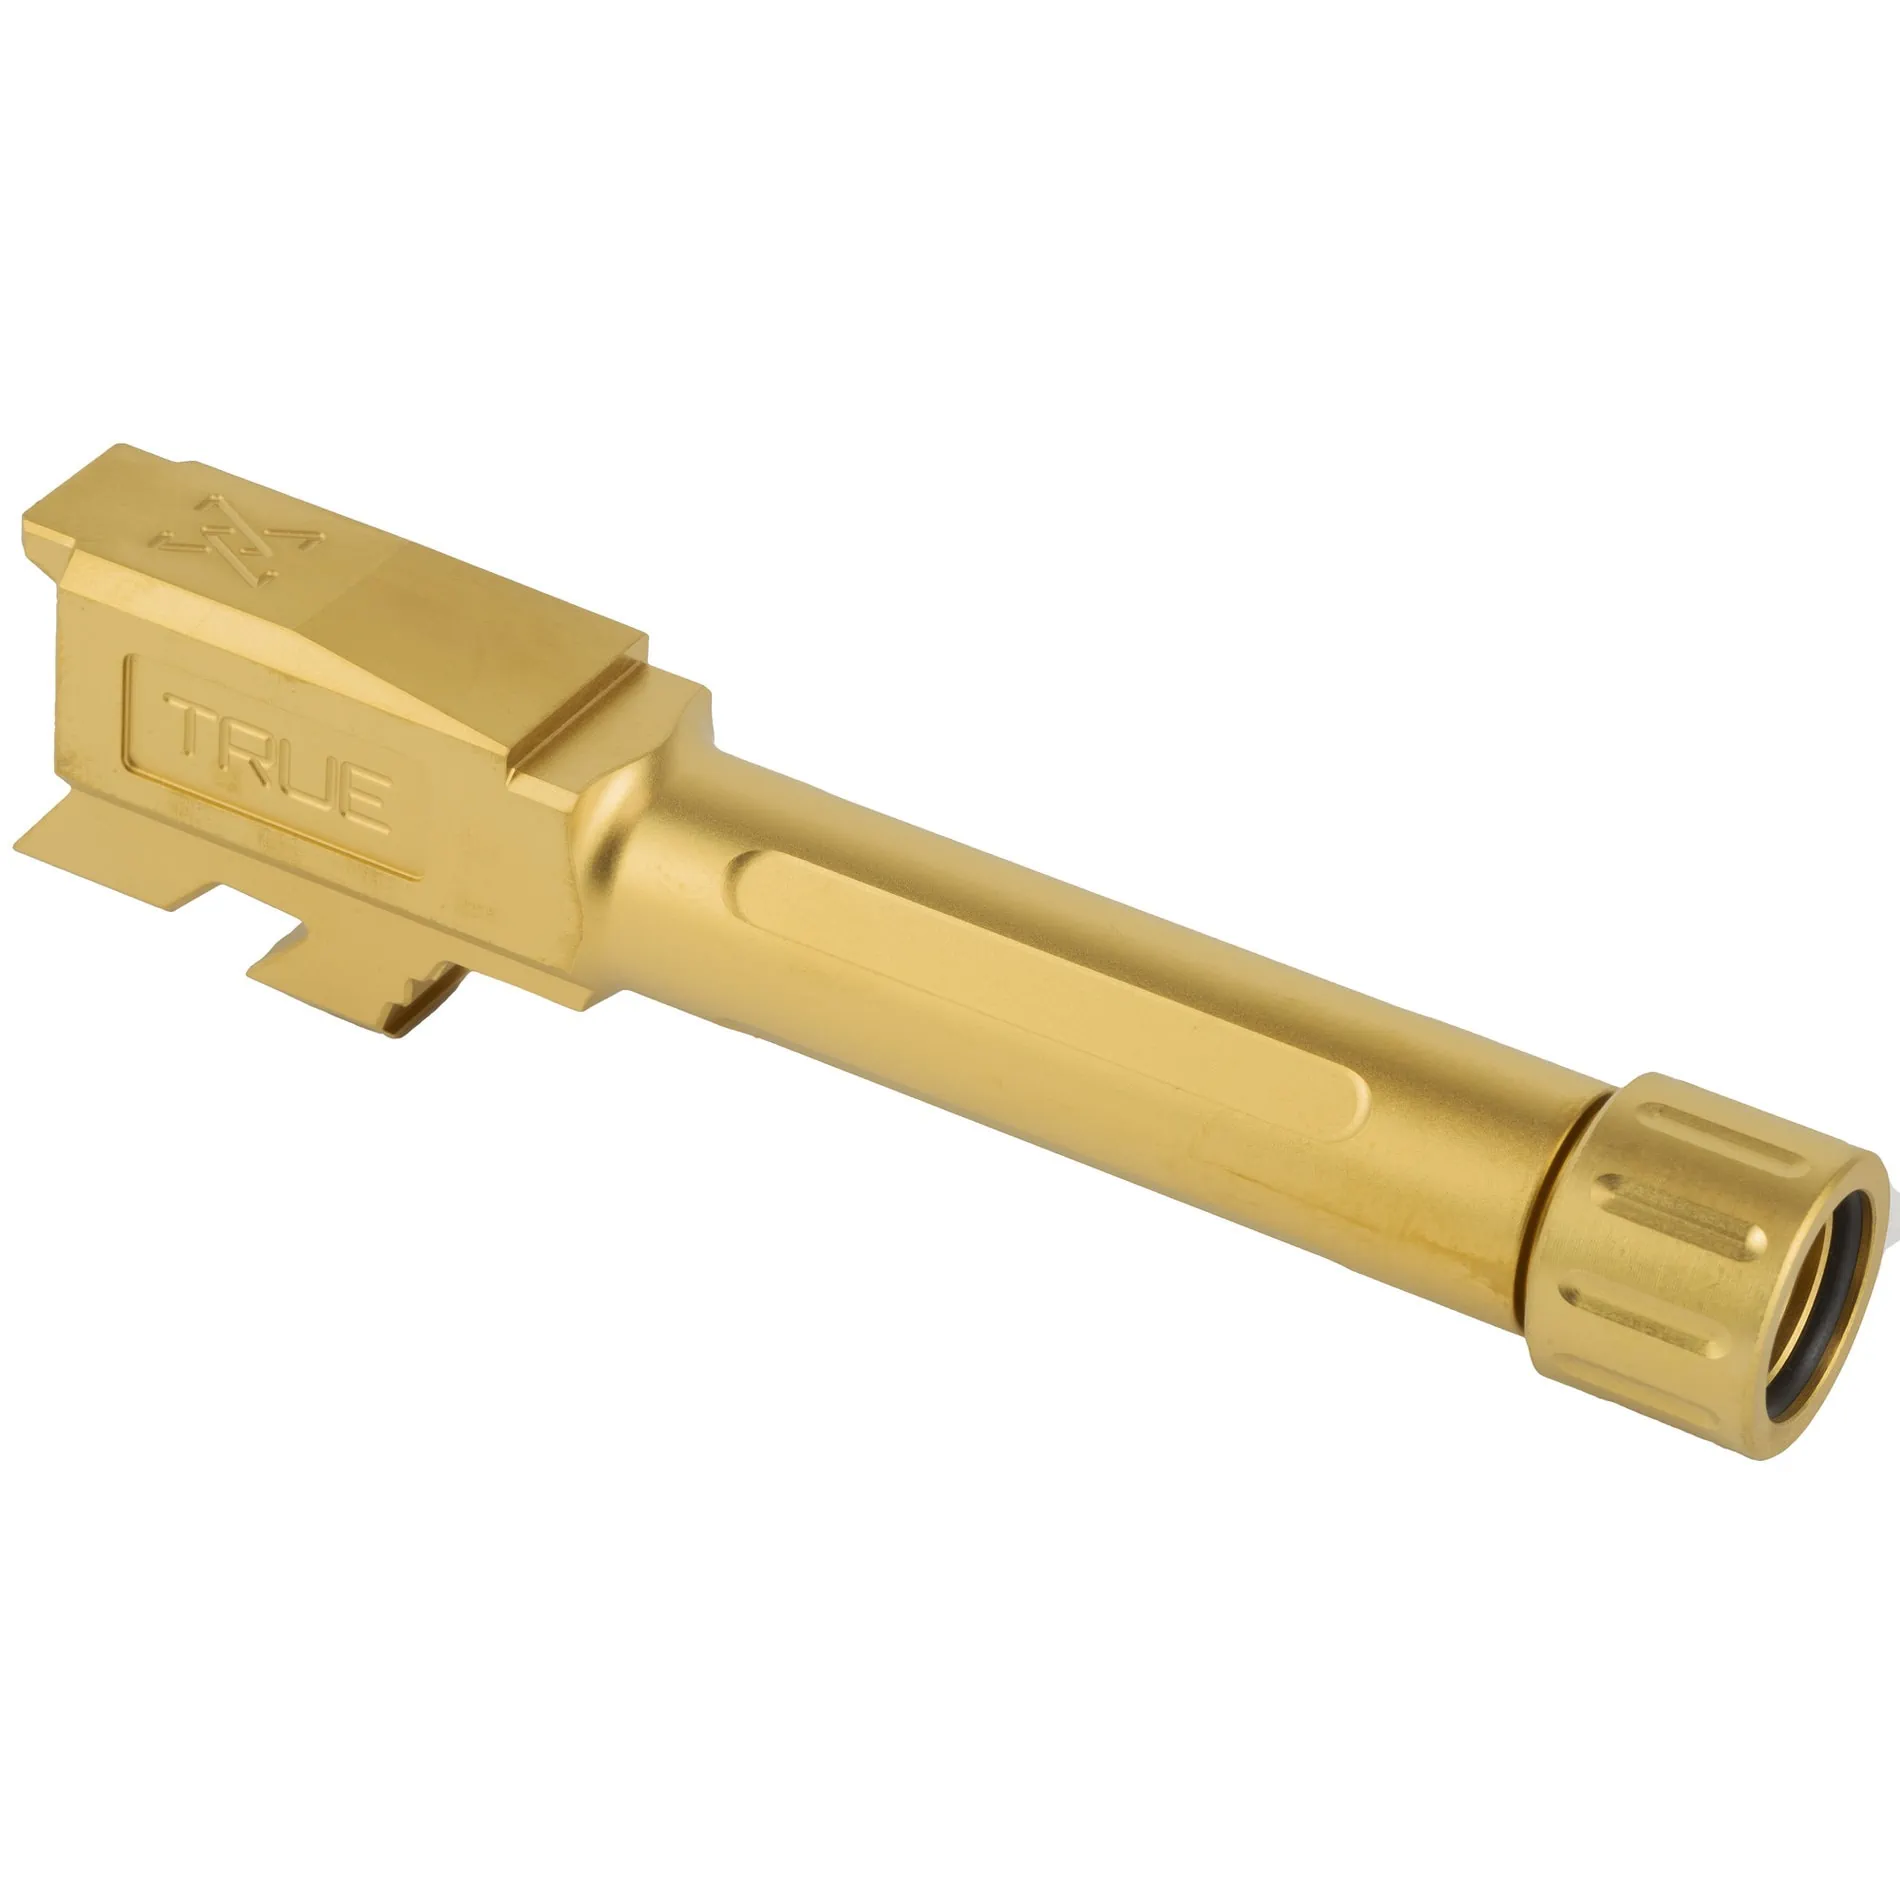 True Precision Threaded Barrel for Glock 43 and 43x Pistols - Gold